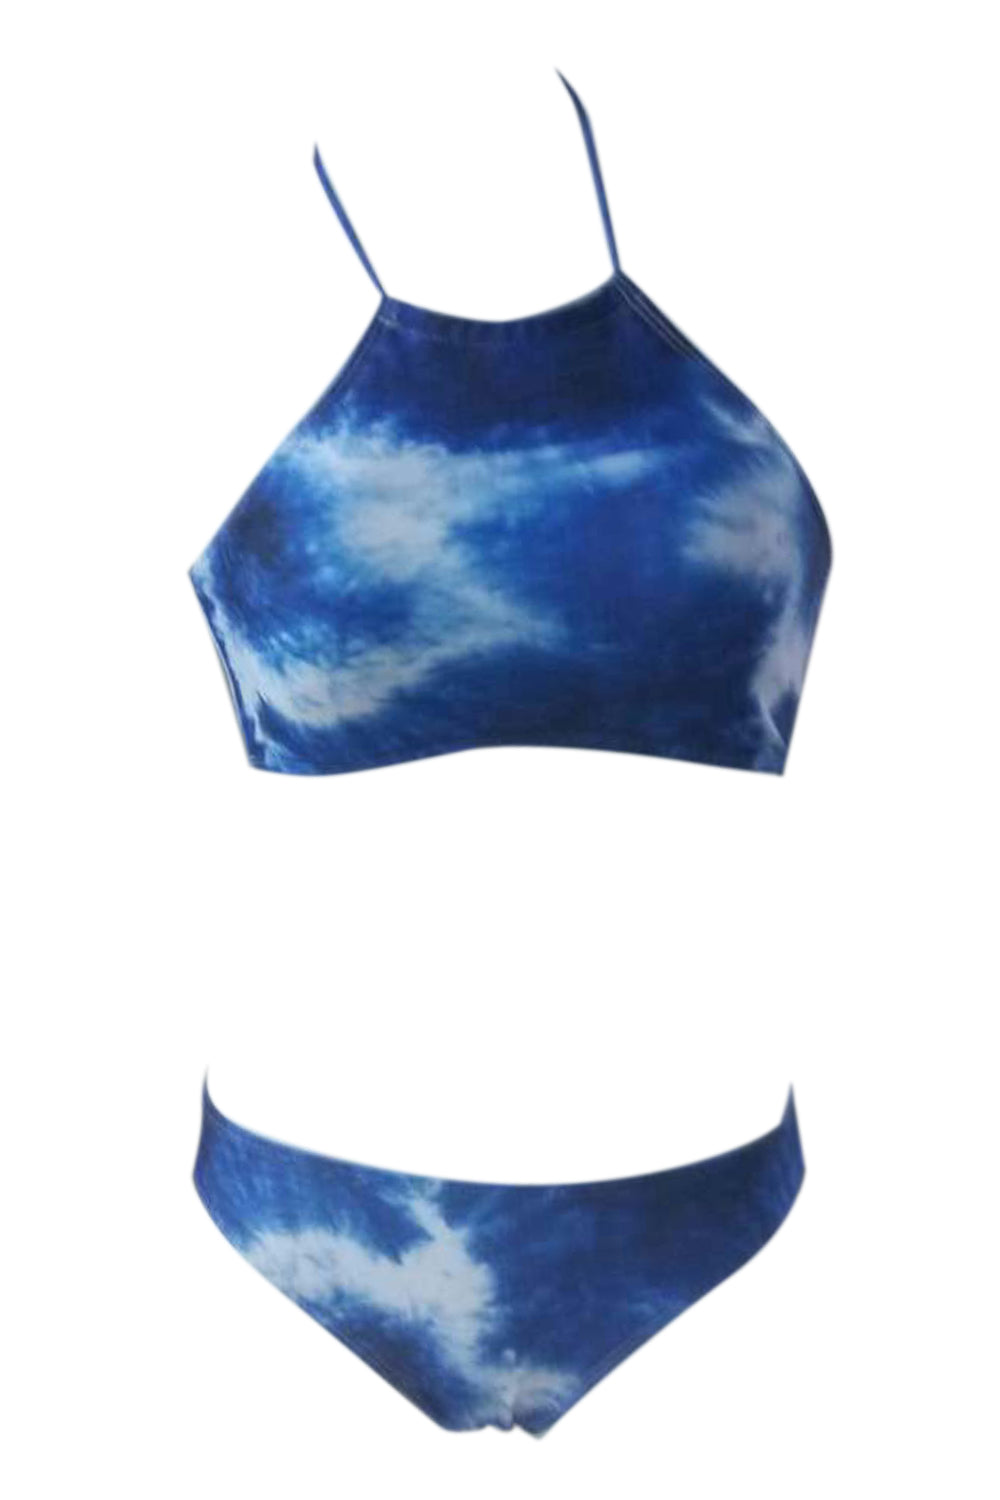 Iyasson New Design Tie-dyed Bikini Set